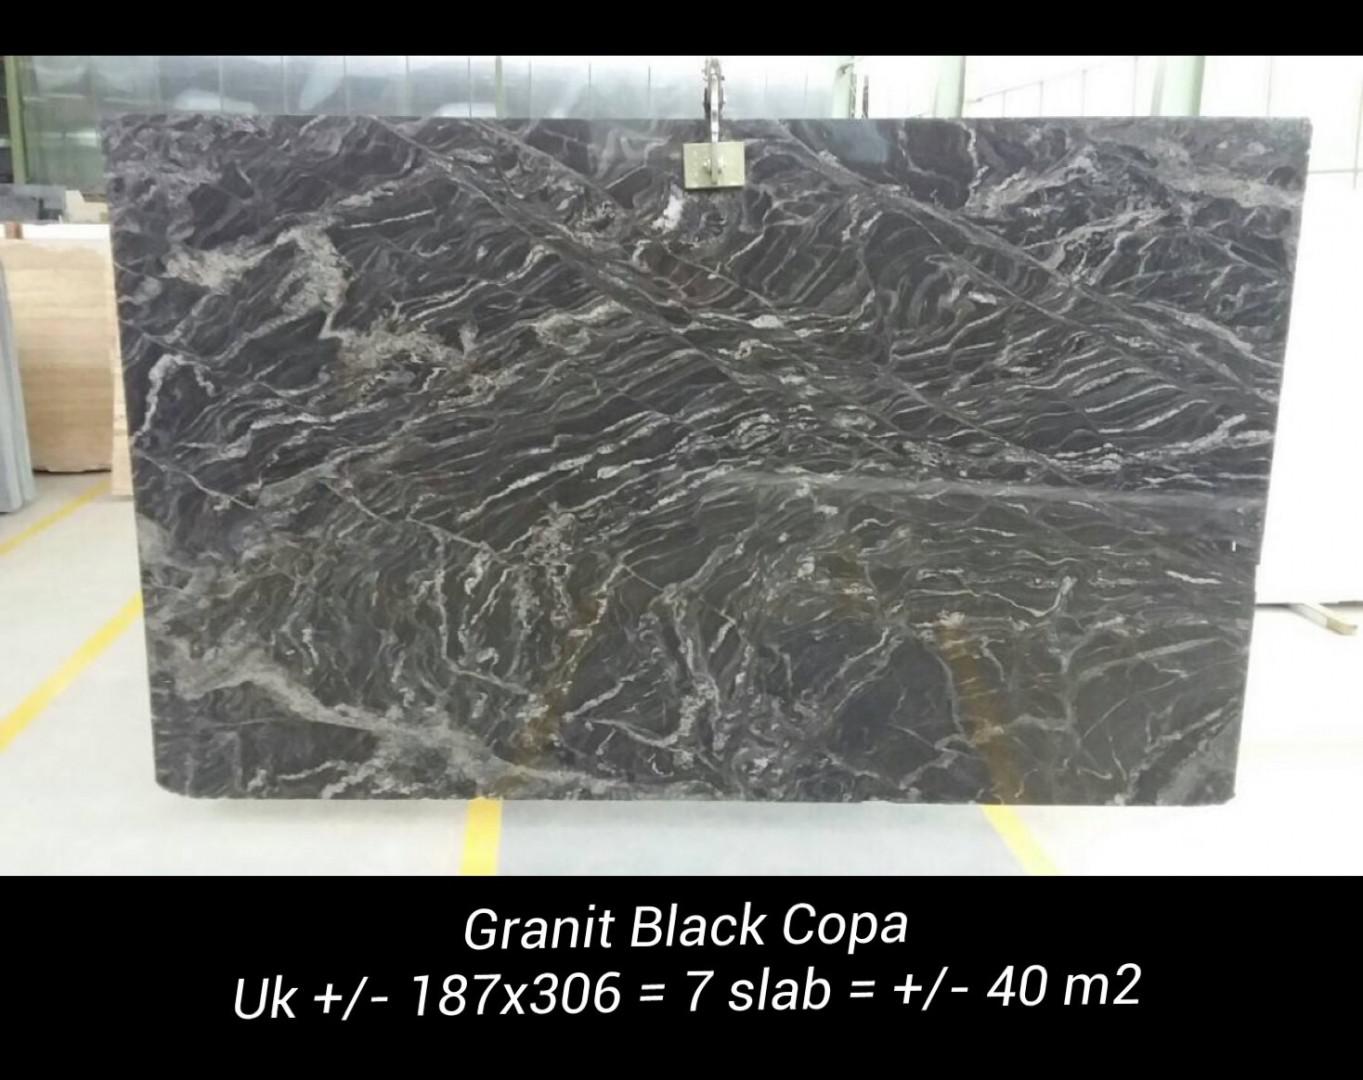 Granit Black Copa from JSP